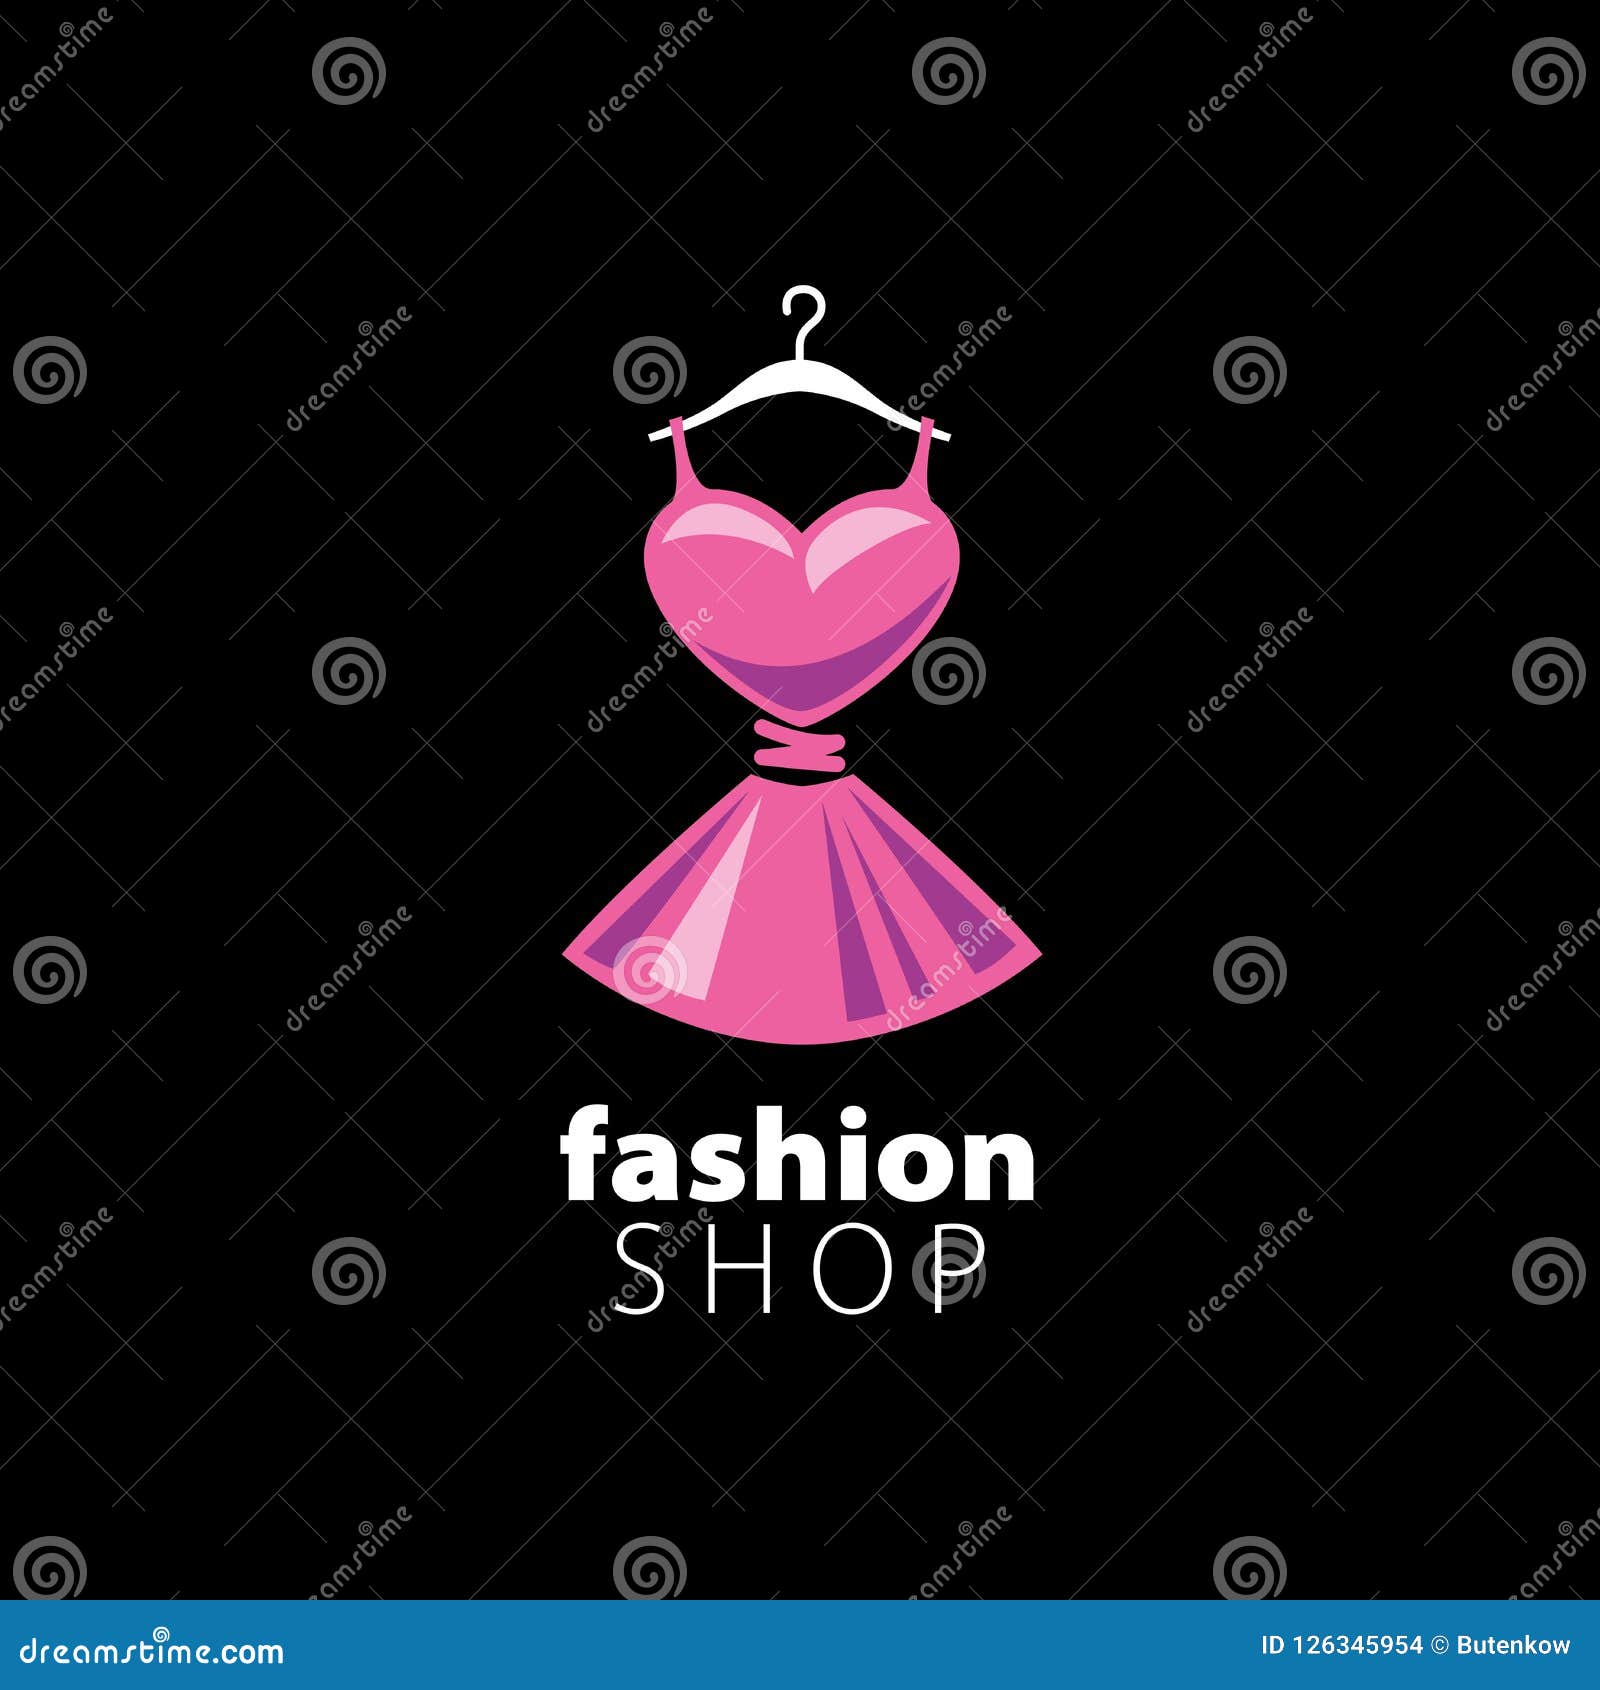 Vector logo clothing stock vector. Illustration of pretty - 126345954